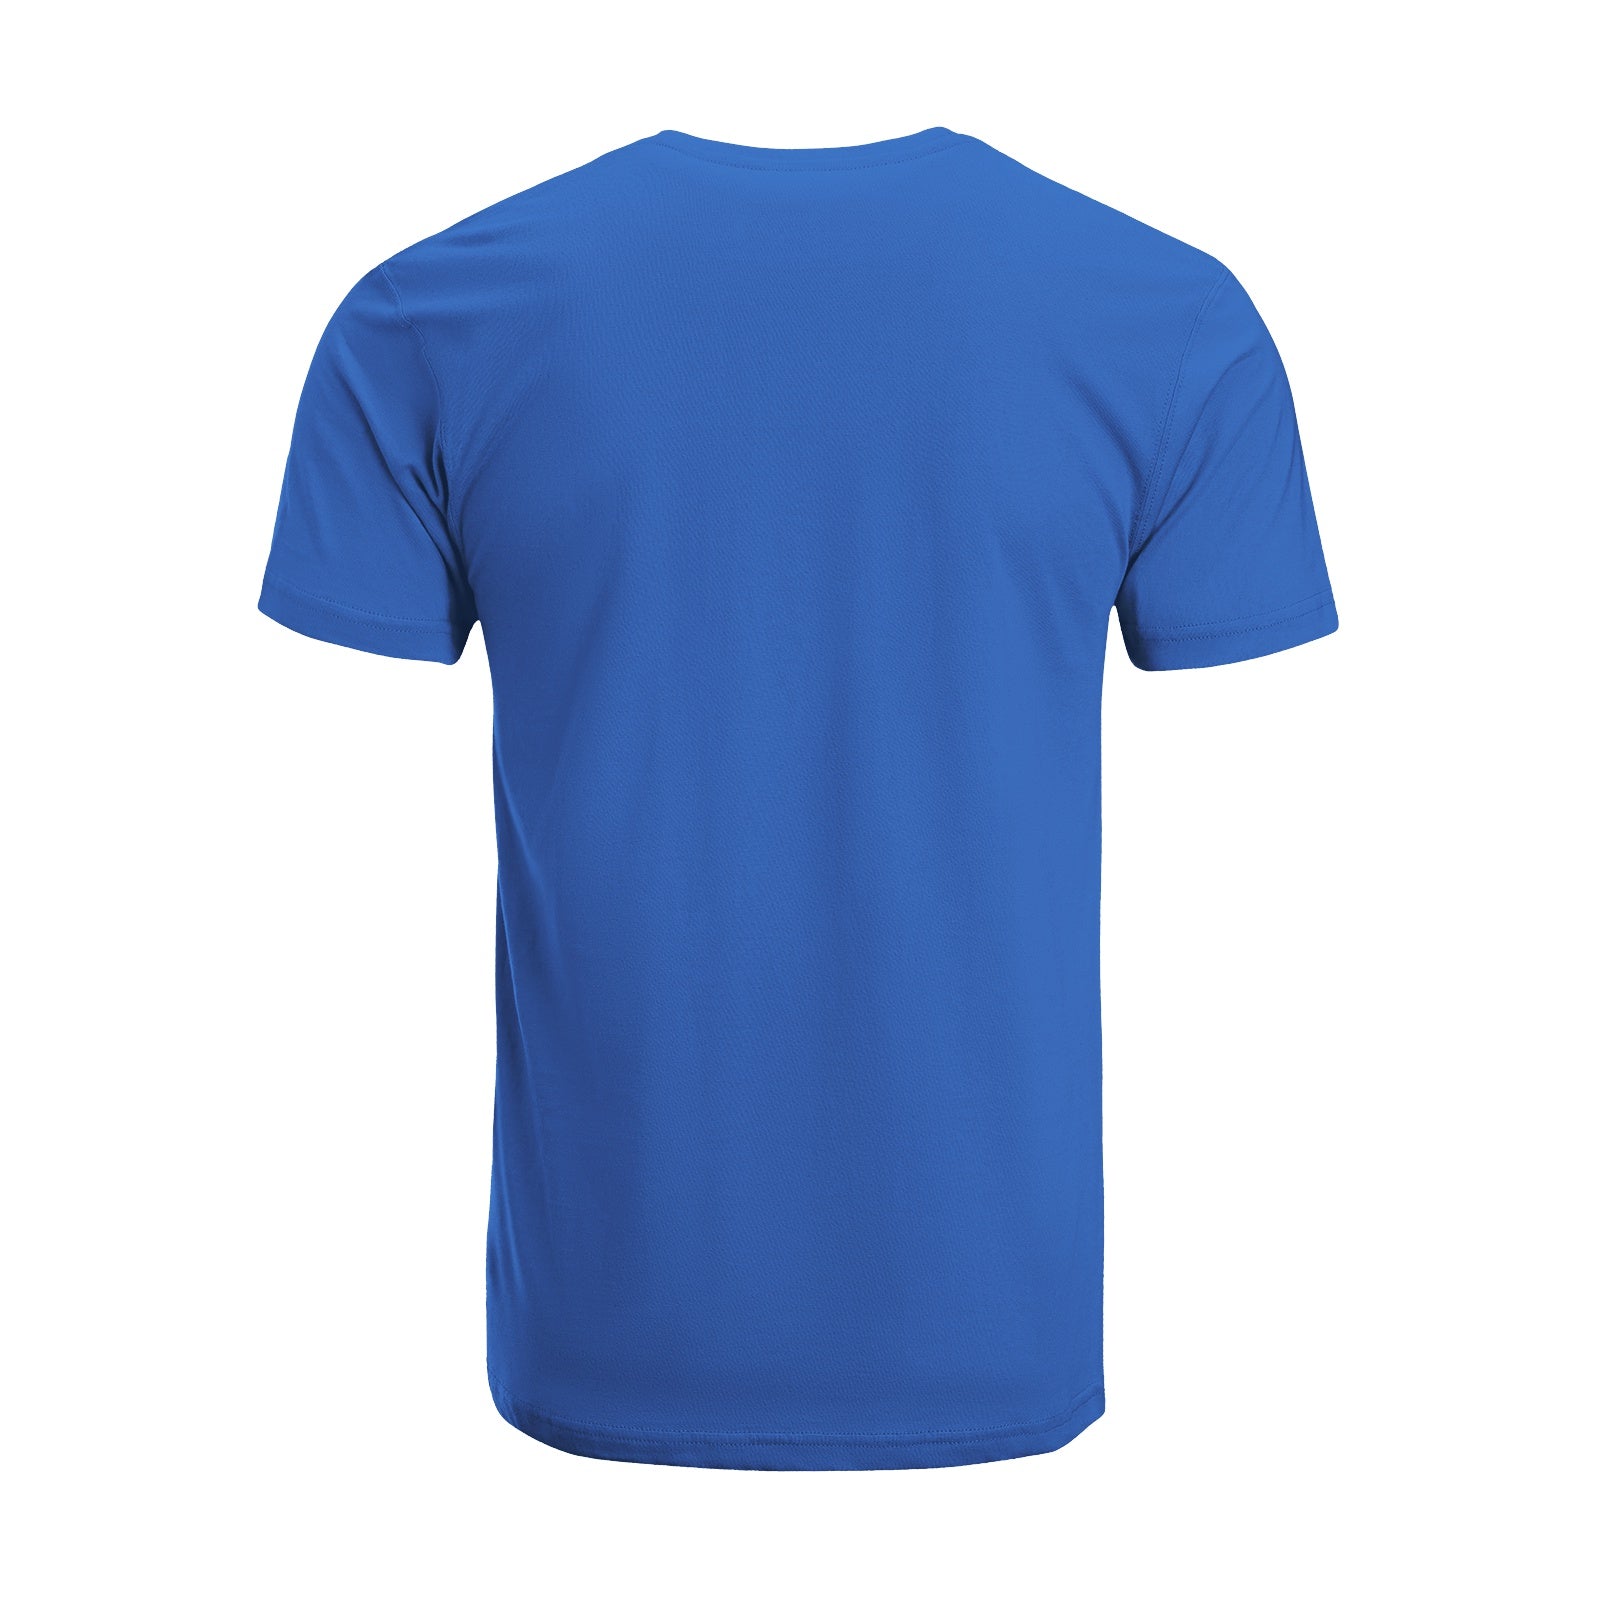 Unisex Short Sleeve Crew Neck Cotton Jersey T-Shirt CAT 33 - Tara-Outfits.com